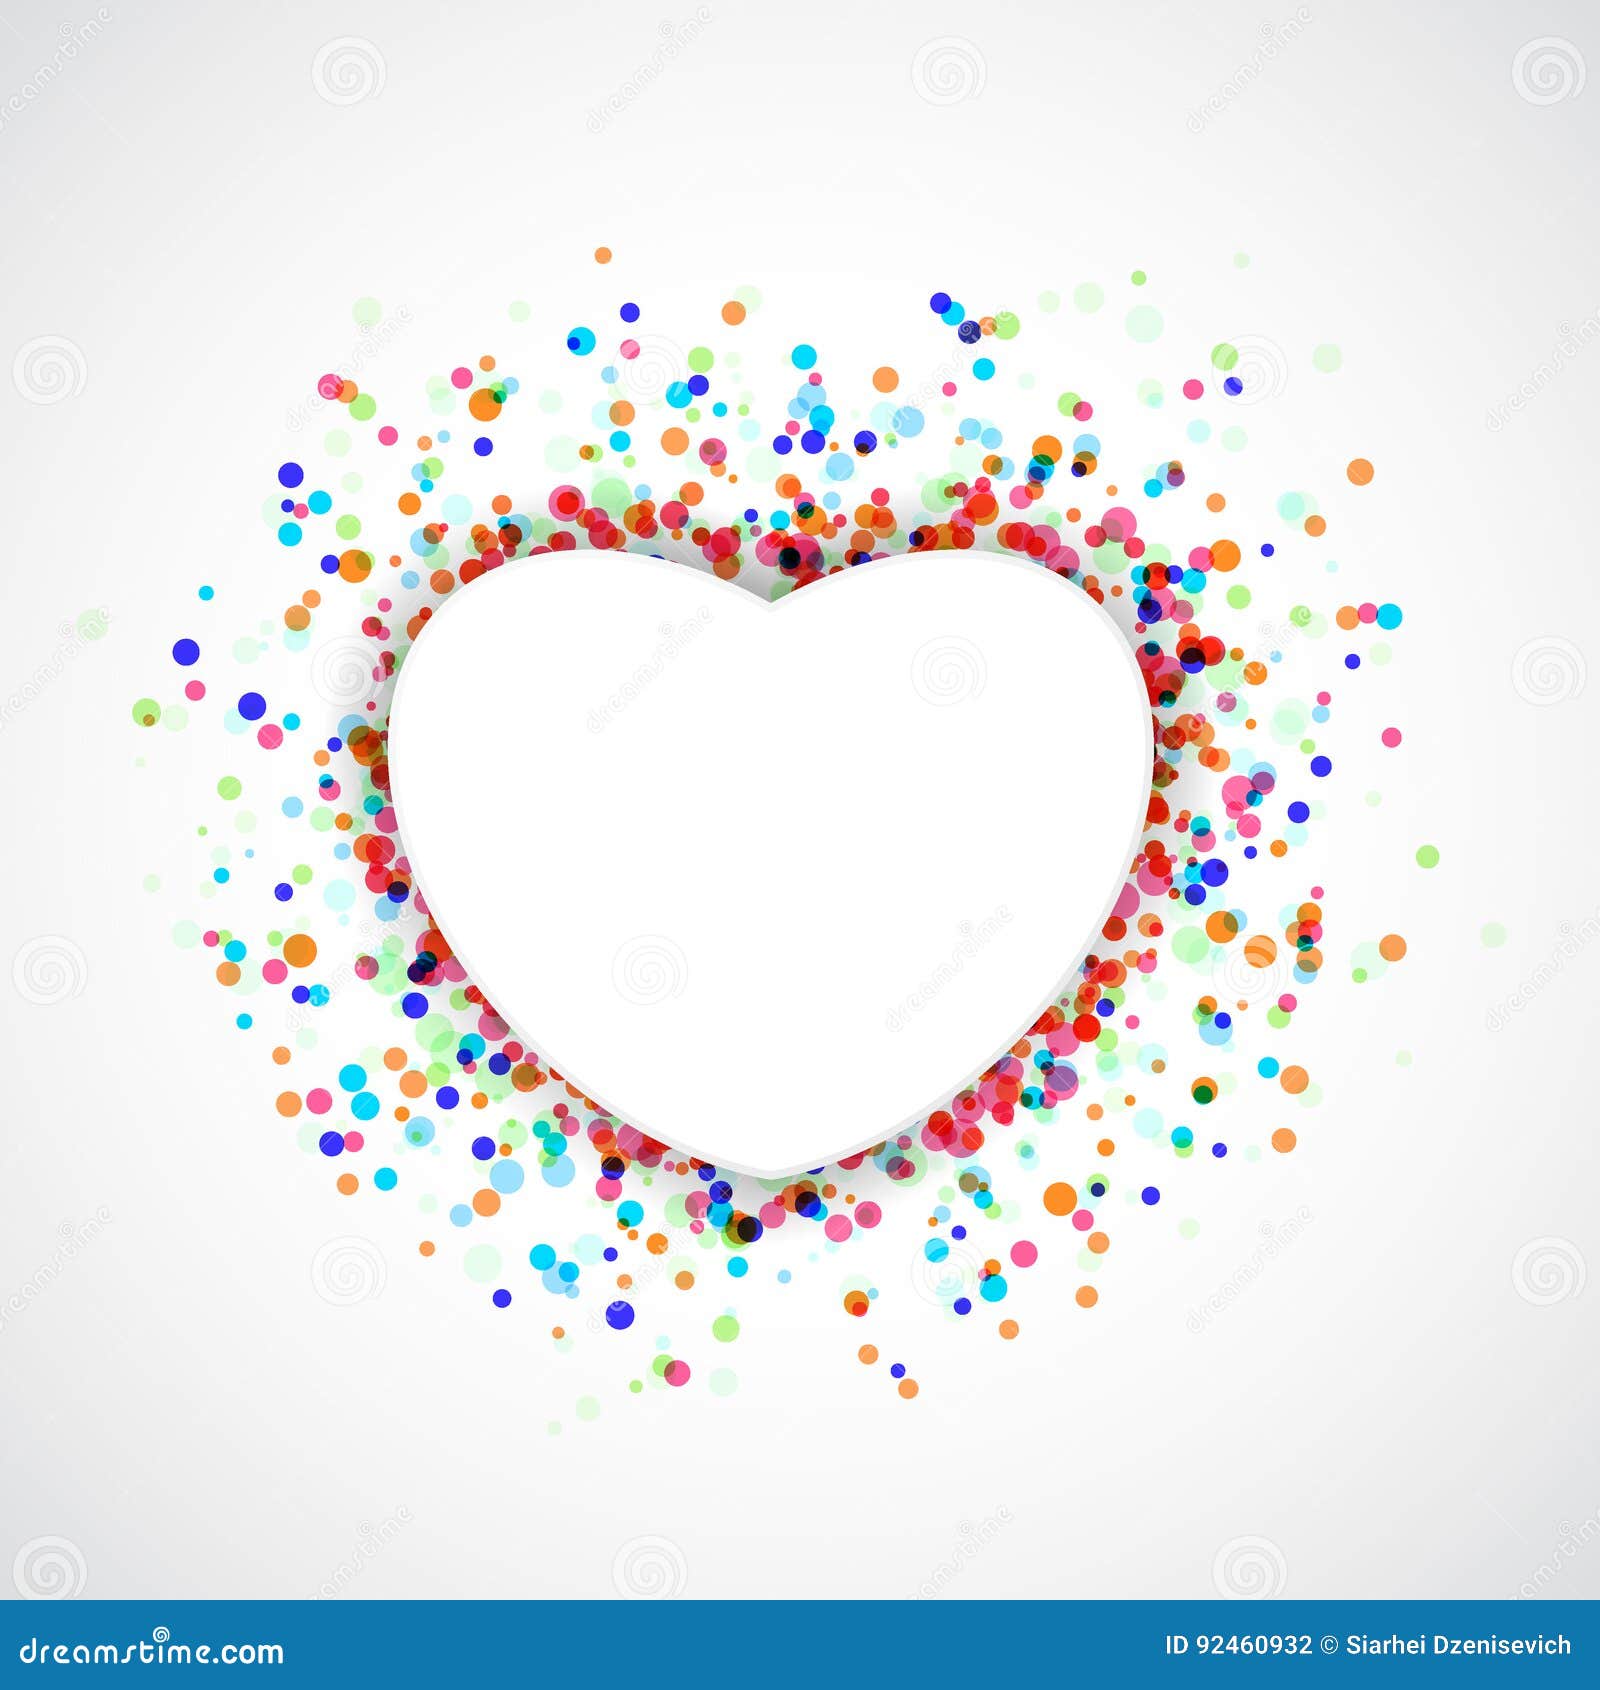 Heart Shape Symbol Over Colorful Confetti or Holi Background Stock ...